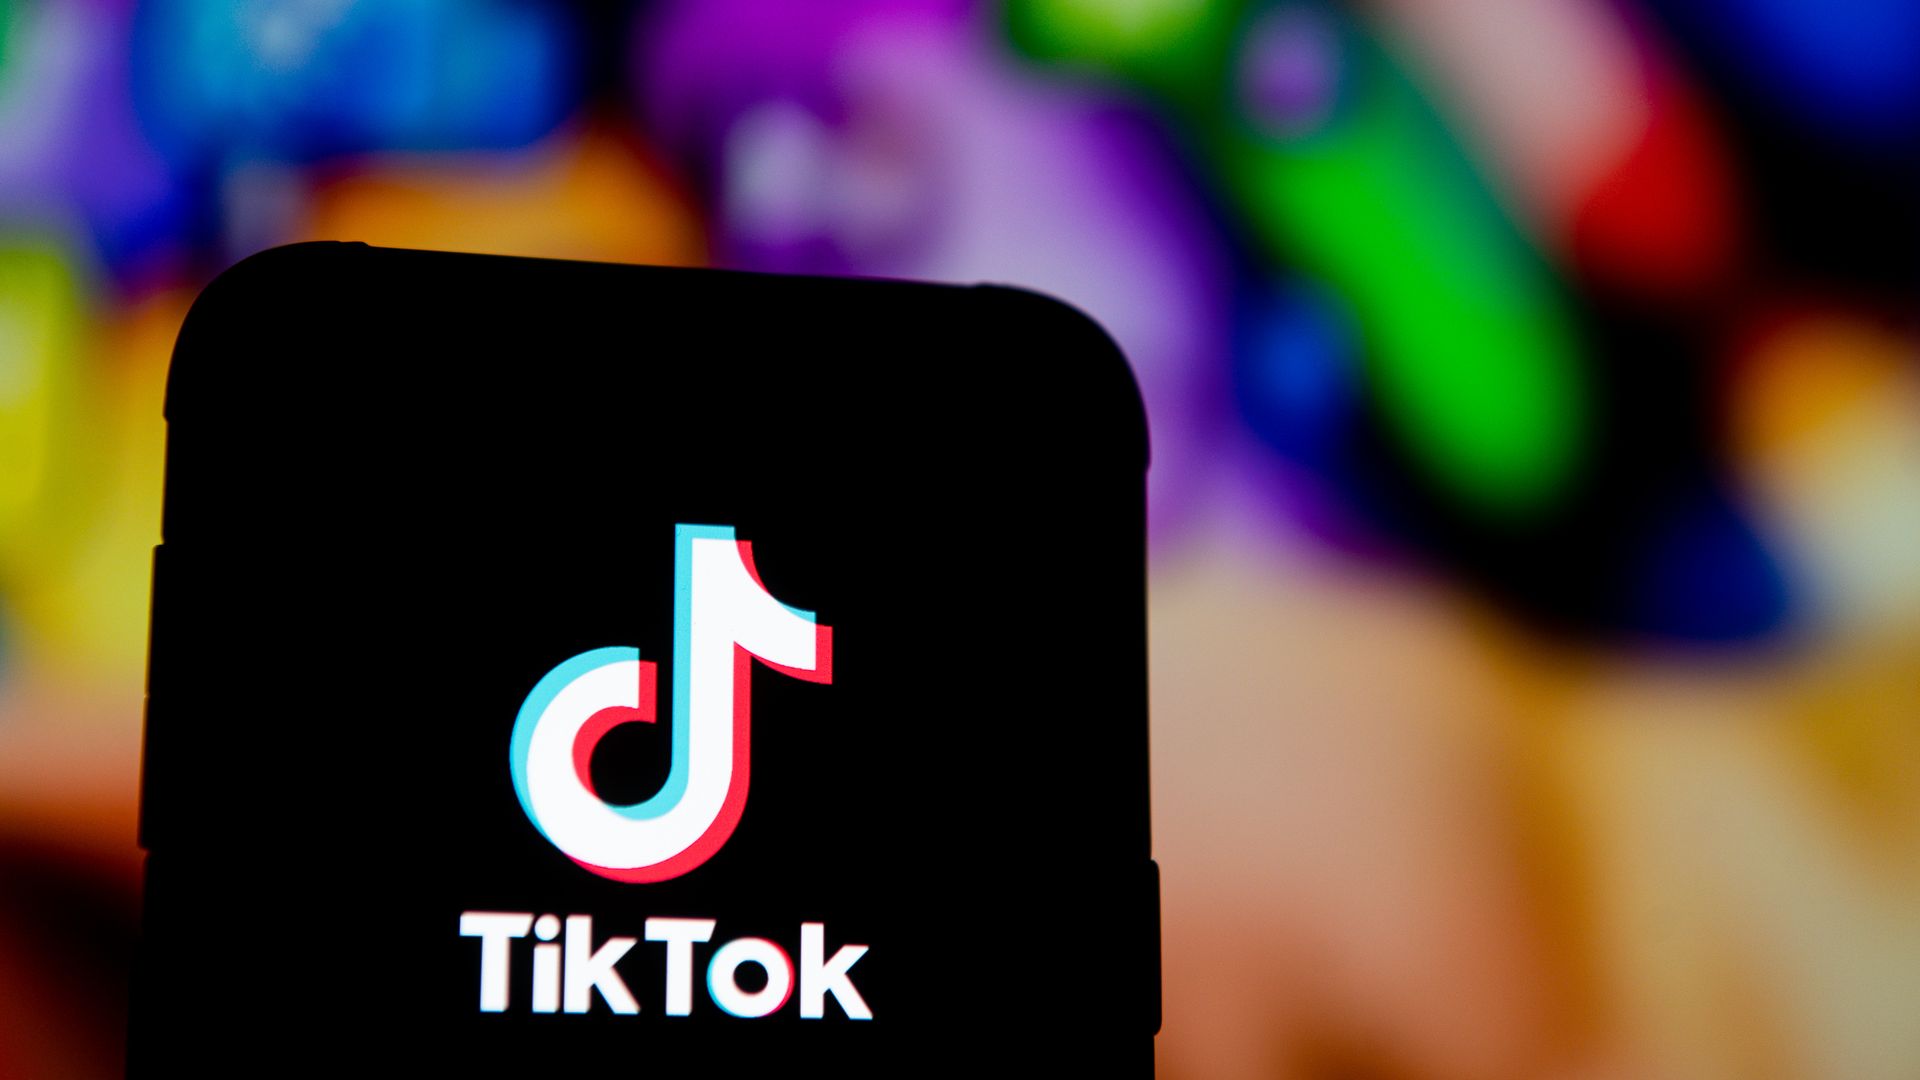 A photo illustration of a TikTok logo displayed on a smartphone.